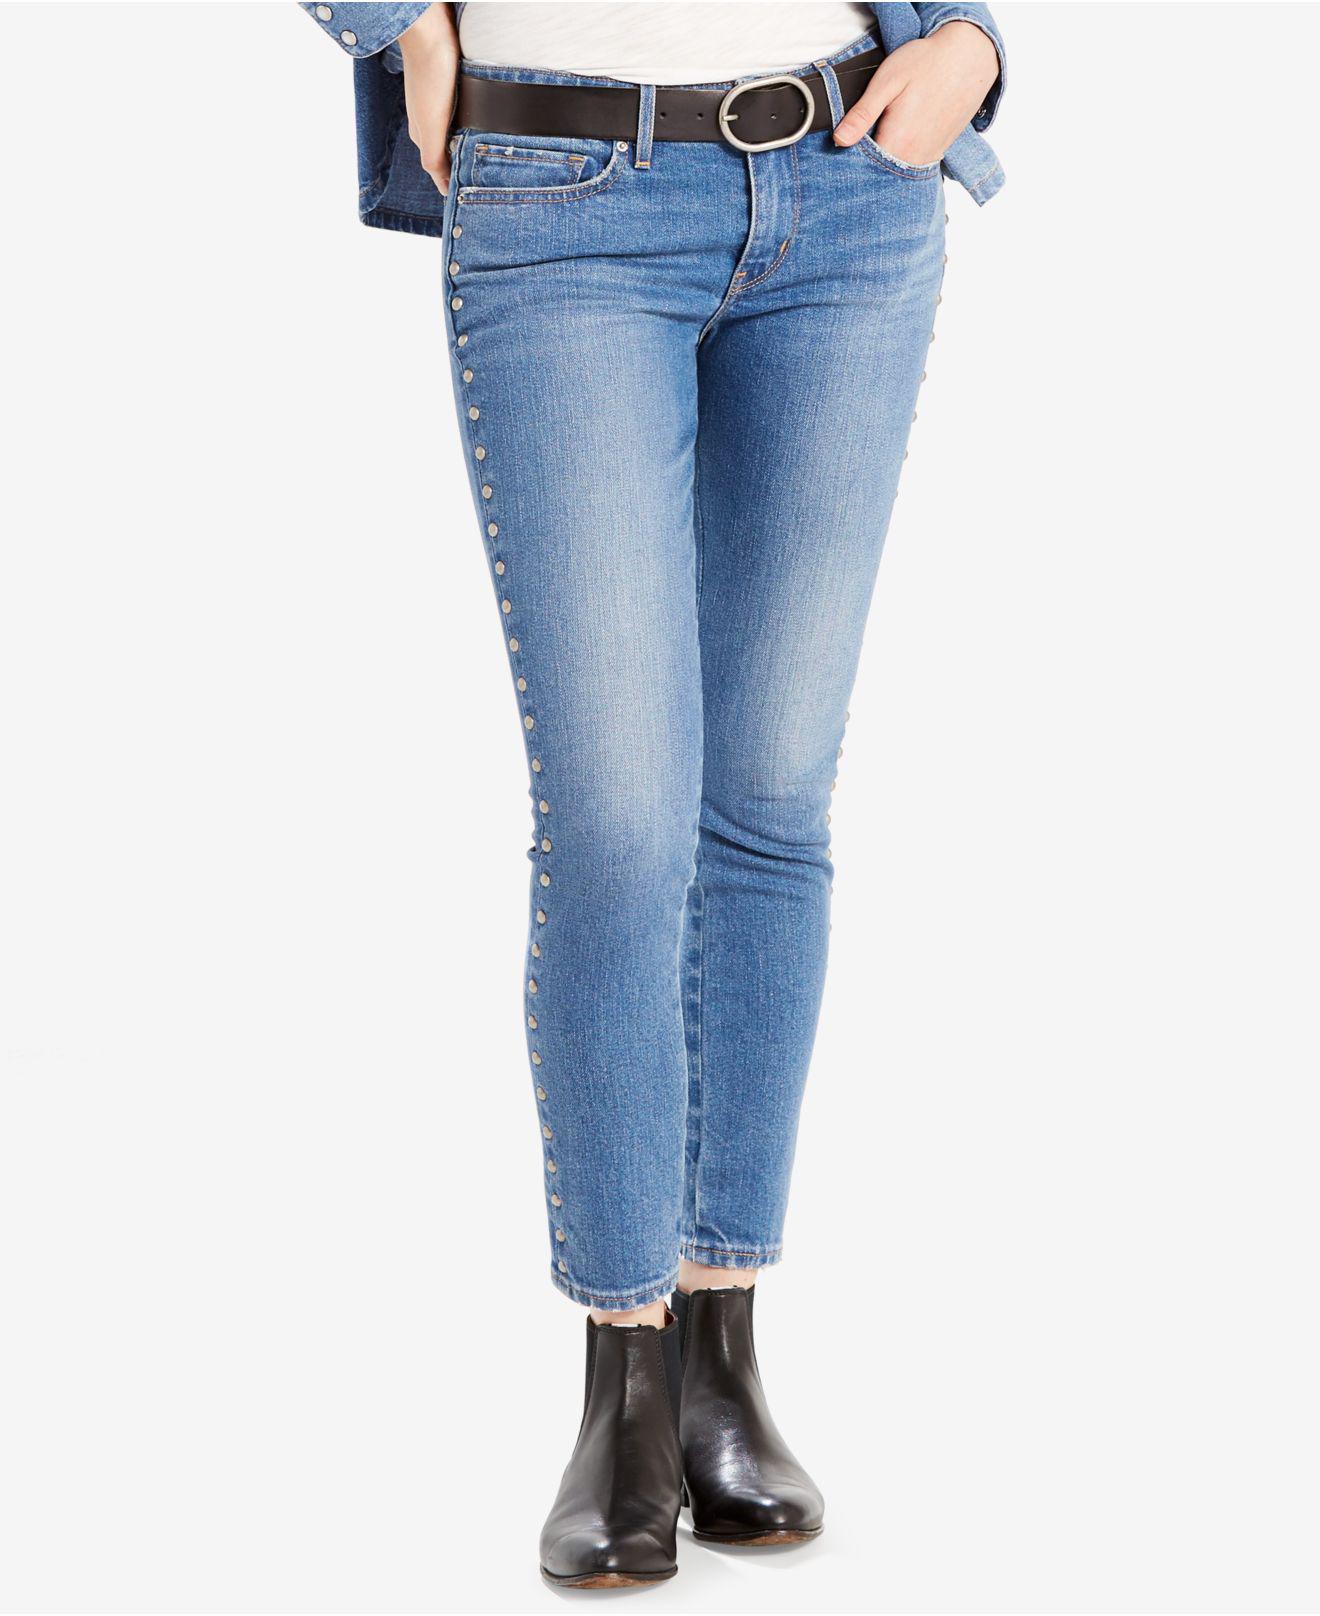 711 skinny studded ankle jeans